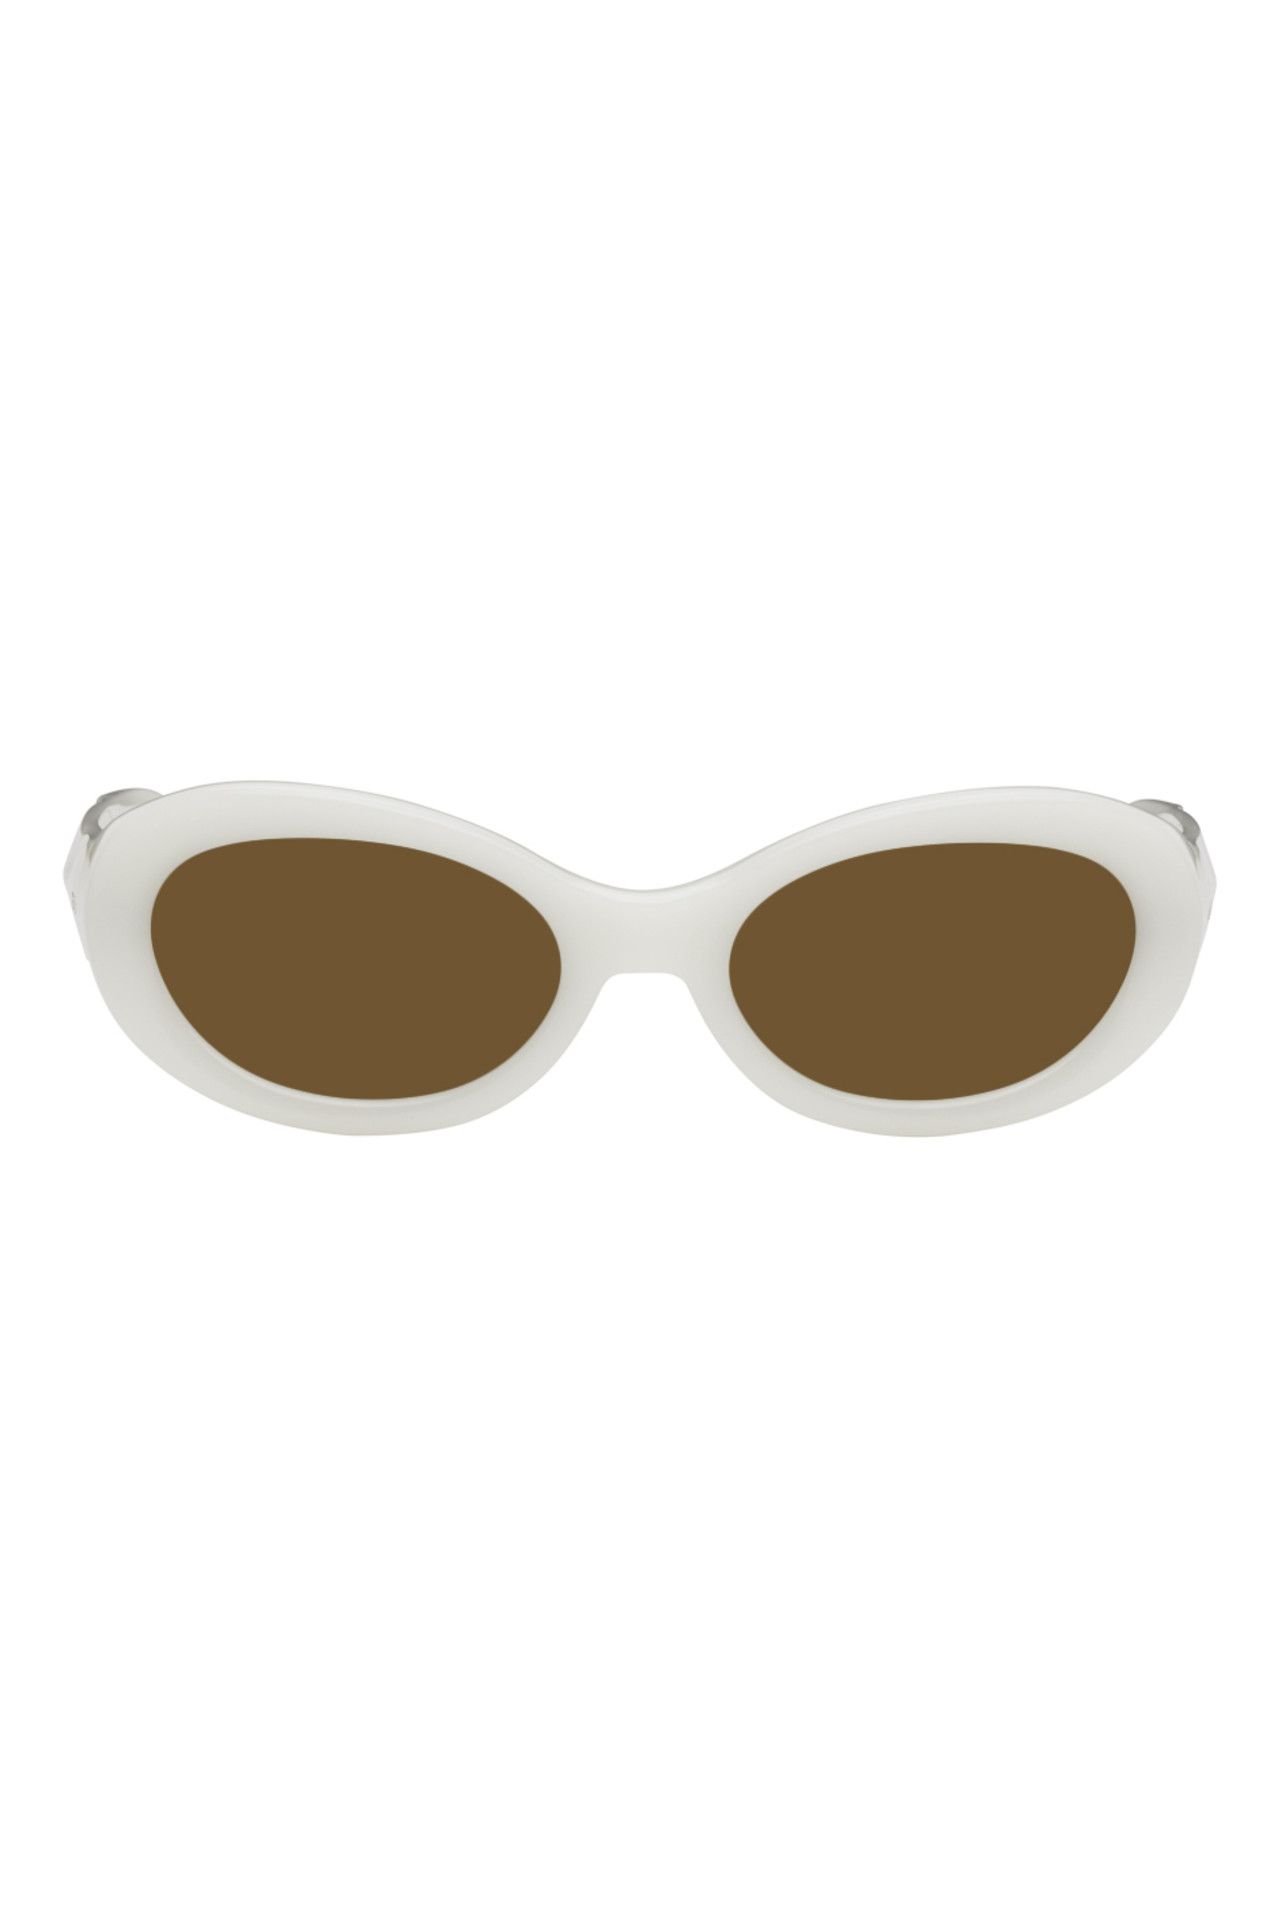 Dries Van Noten - White Linda Farrow Edition Oval Sunglasses | SSENSE